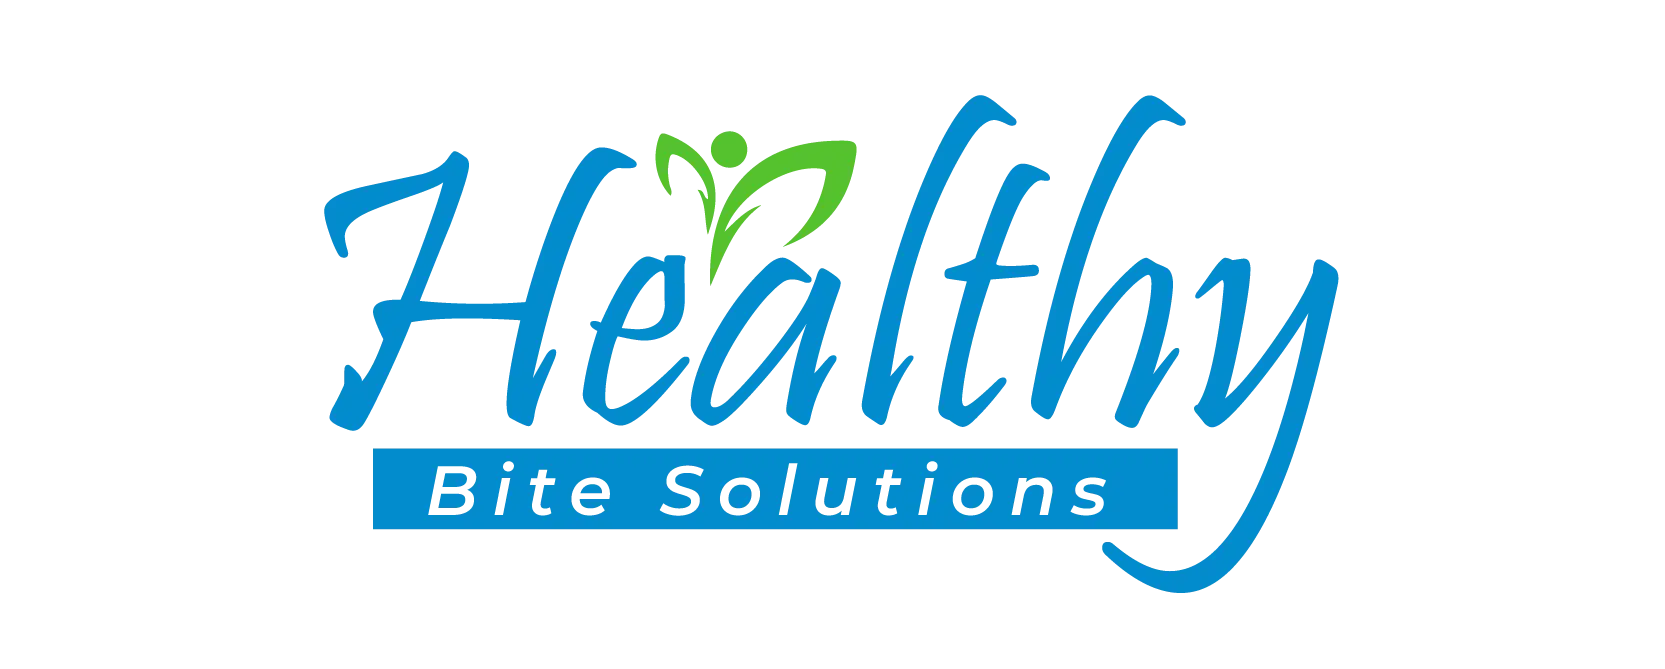 Healthy Bite Solutions, Transparent Logo